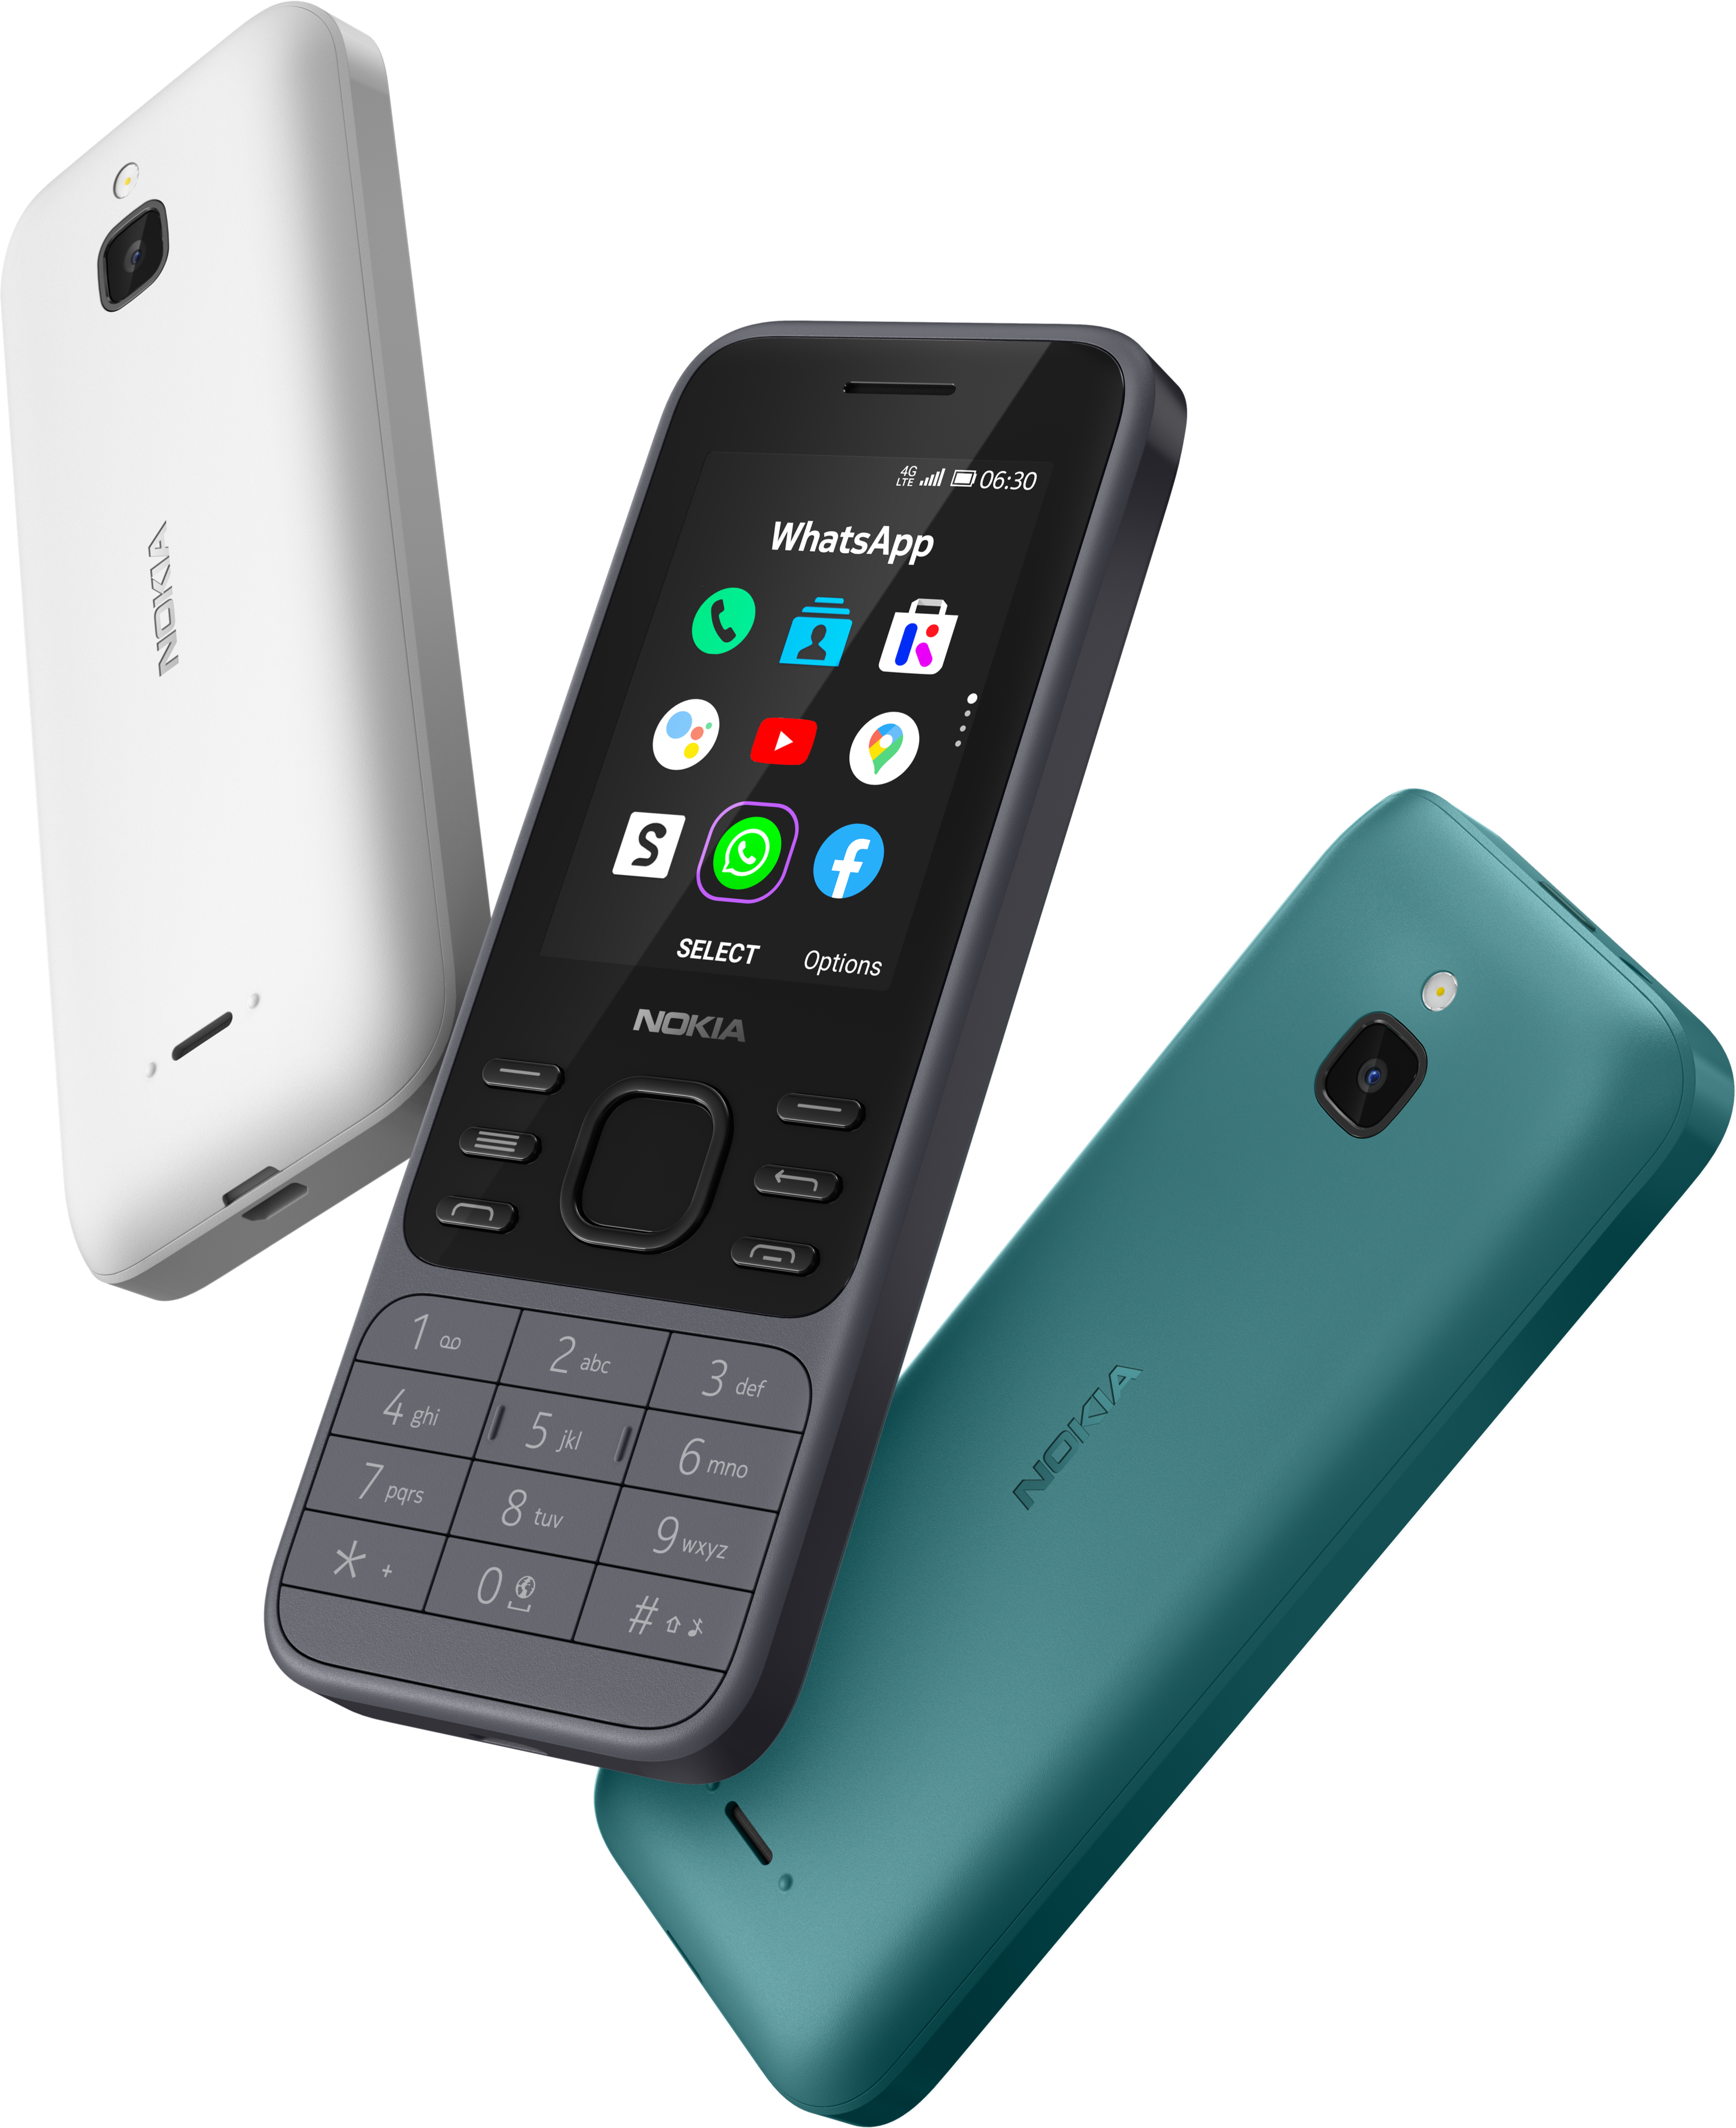 Nokia 6300 4G, Desbloqueado, SIM Dual, Punto de Acceso WiFi, Aplicaciones sociales, Google Maps and Assistant